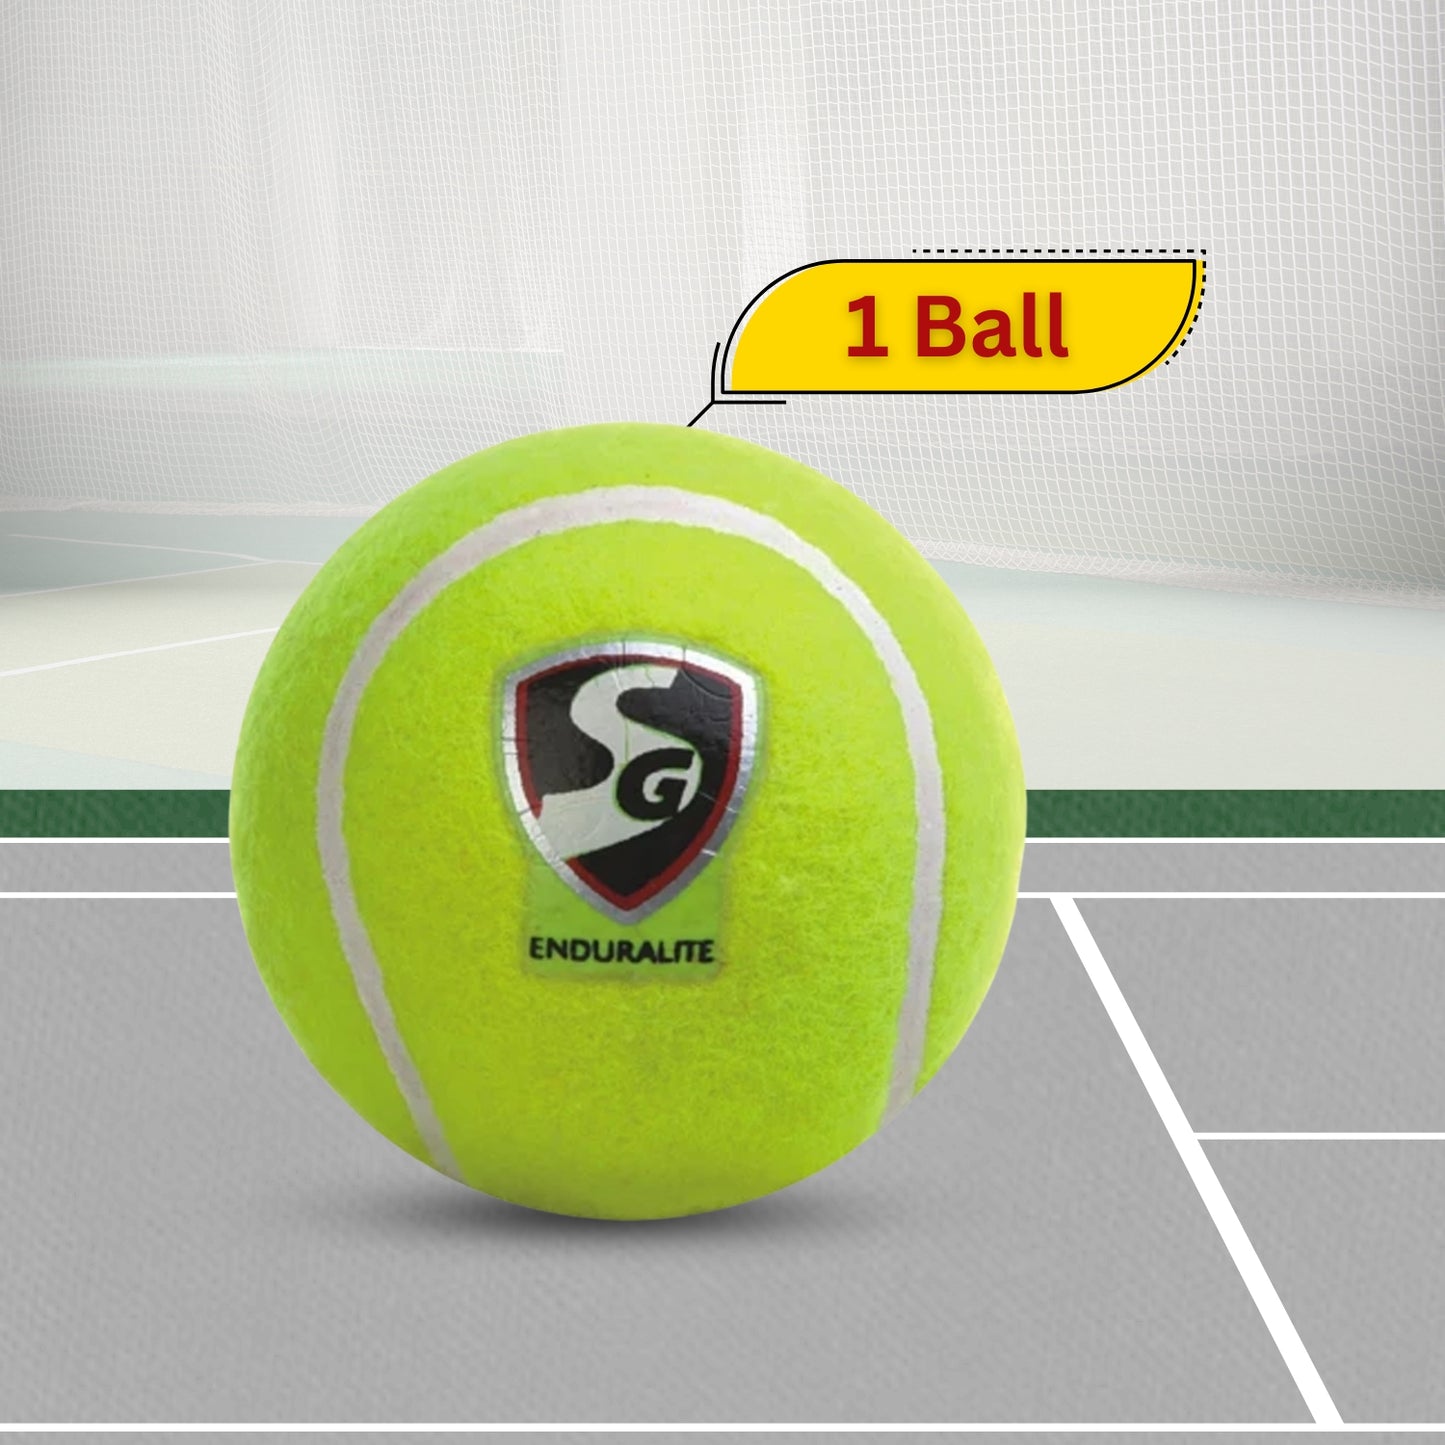 SG Enduralite Cricket Tennis Ball, 1Pc - Yellow - Best Price online Prokicksports.com